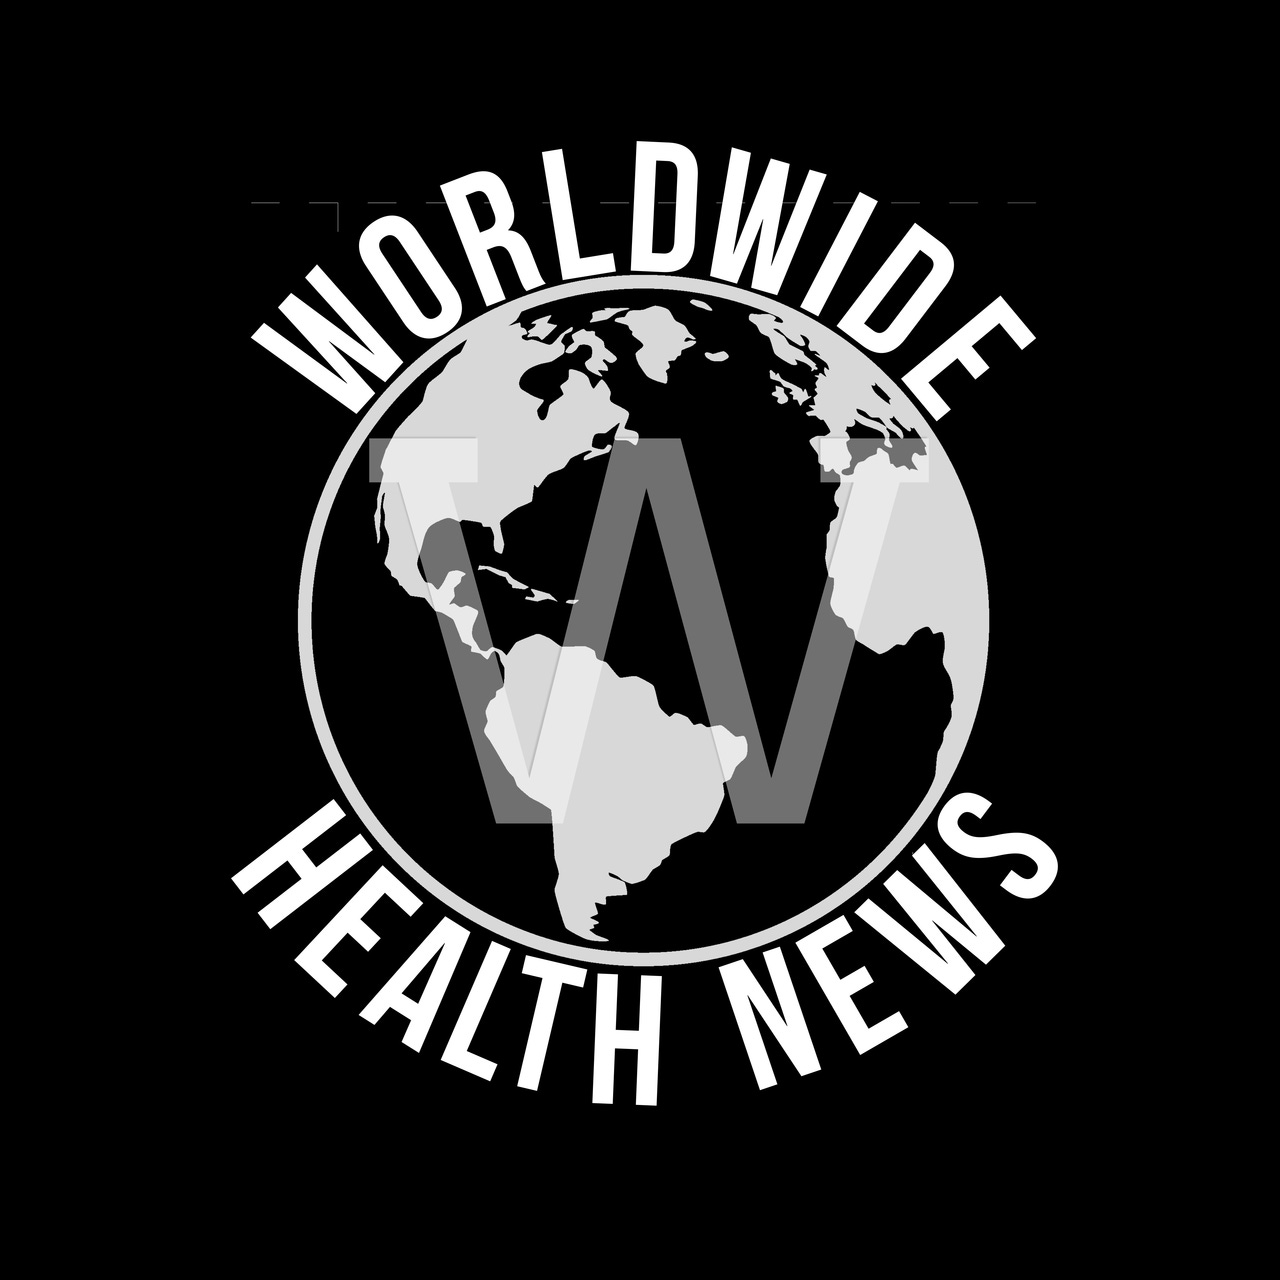 Worldwide Health News